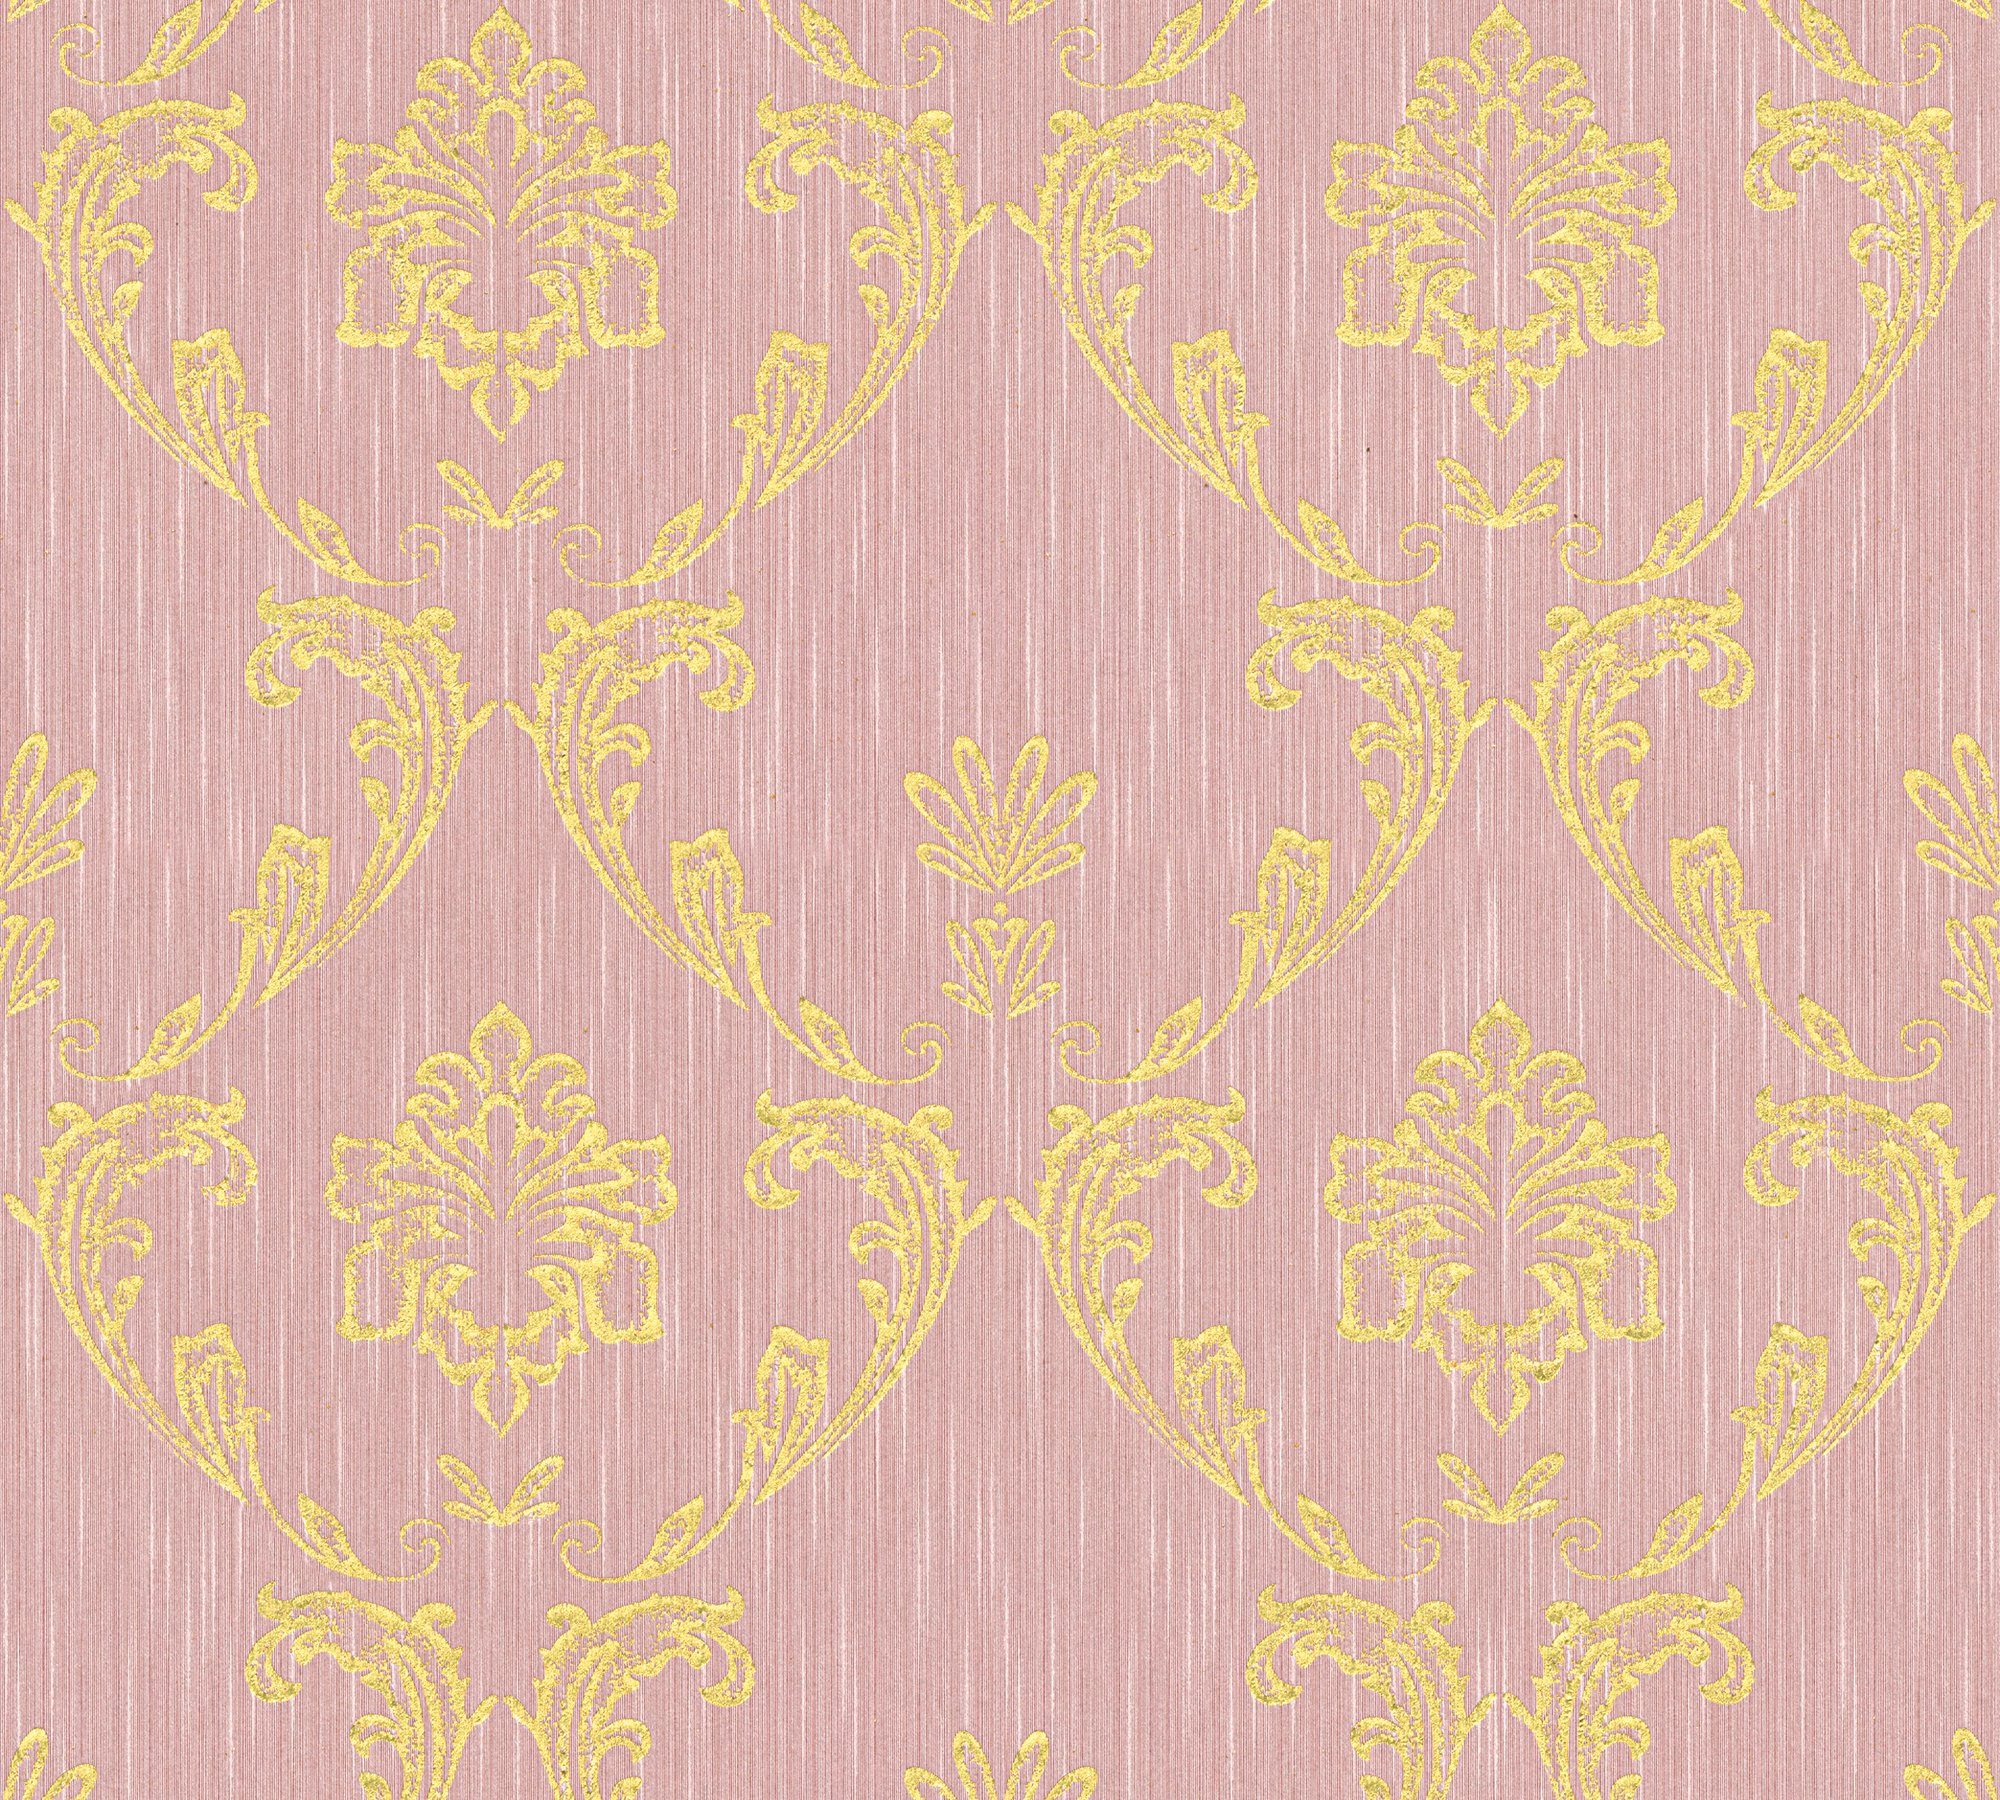 Tapete samtig, Barock Ornament gold/rosa Paper Metallic Barock, matt, glänzend, Architects Textiltapete Silk,